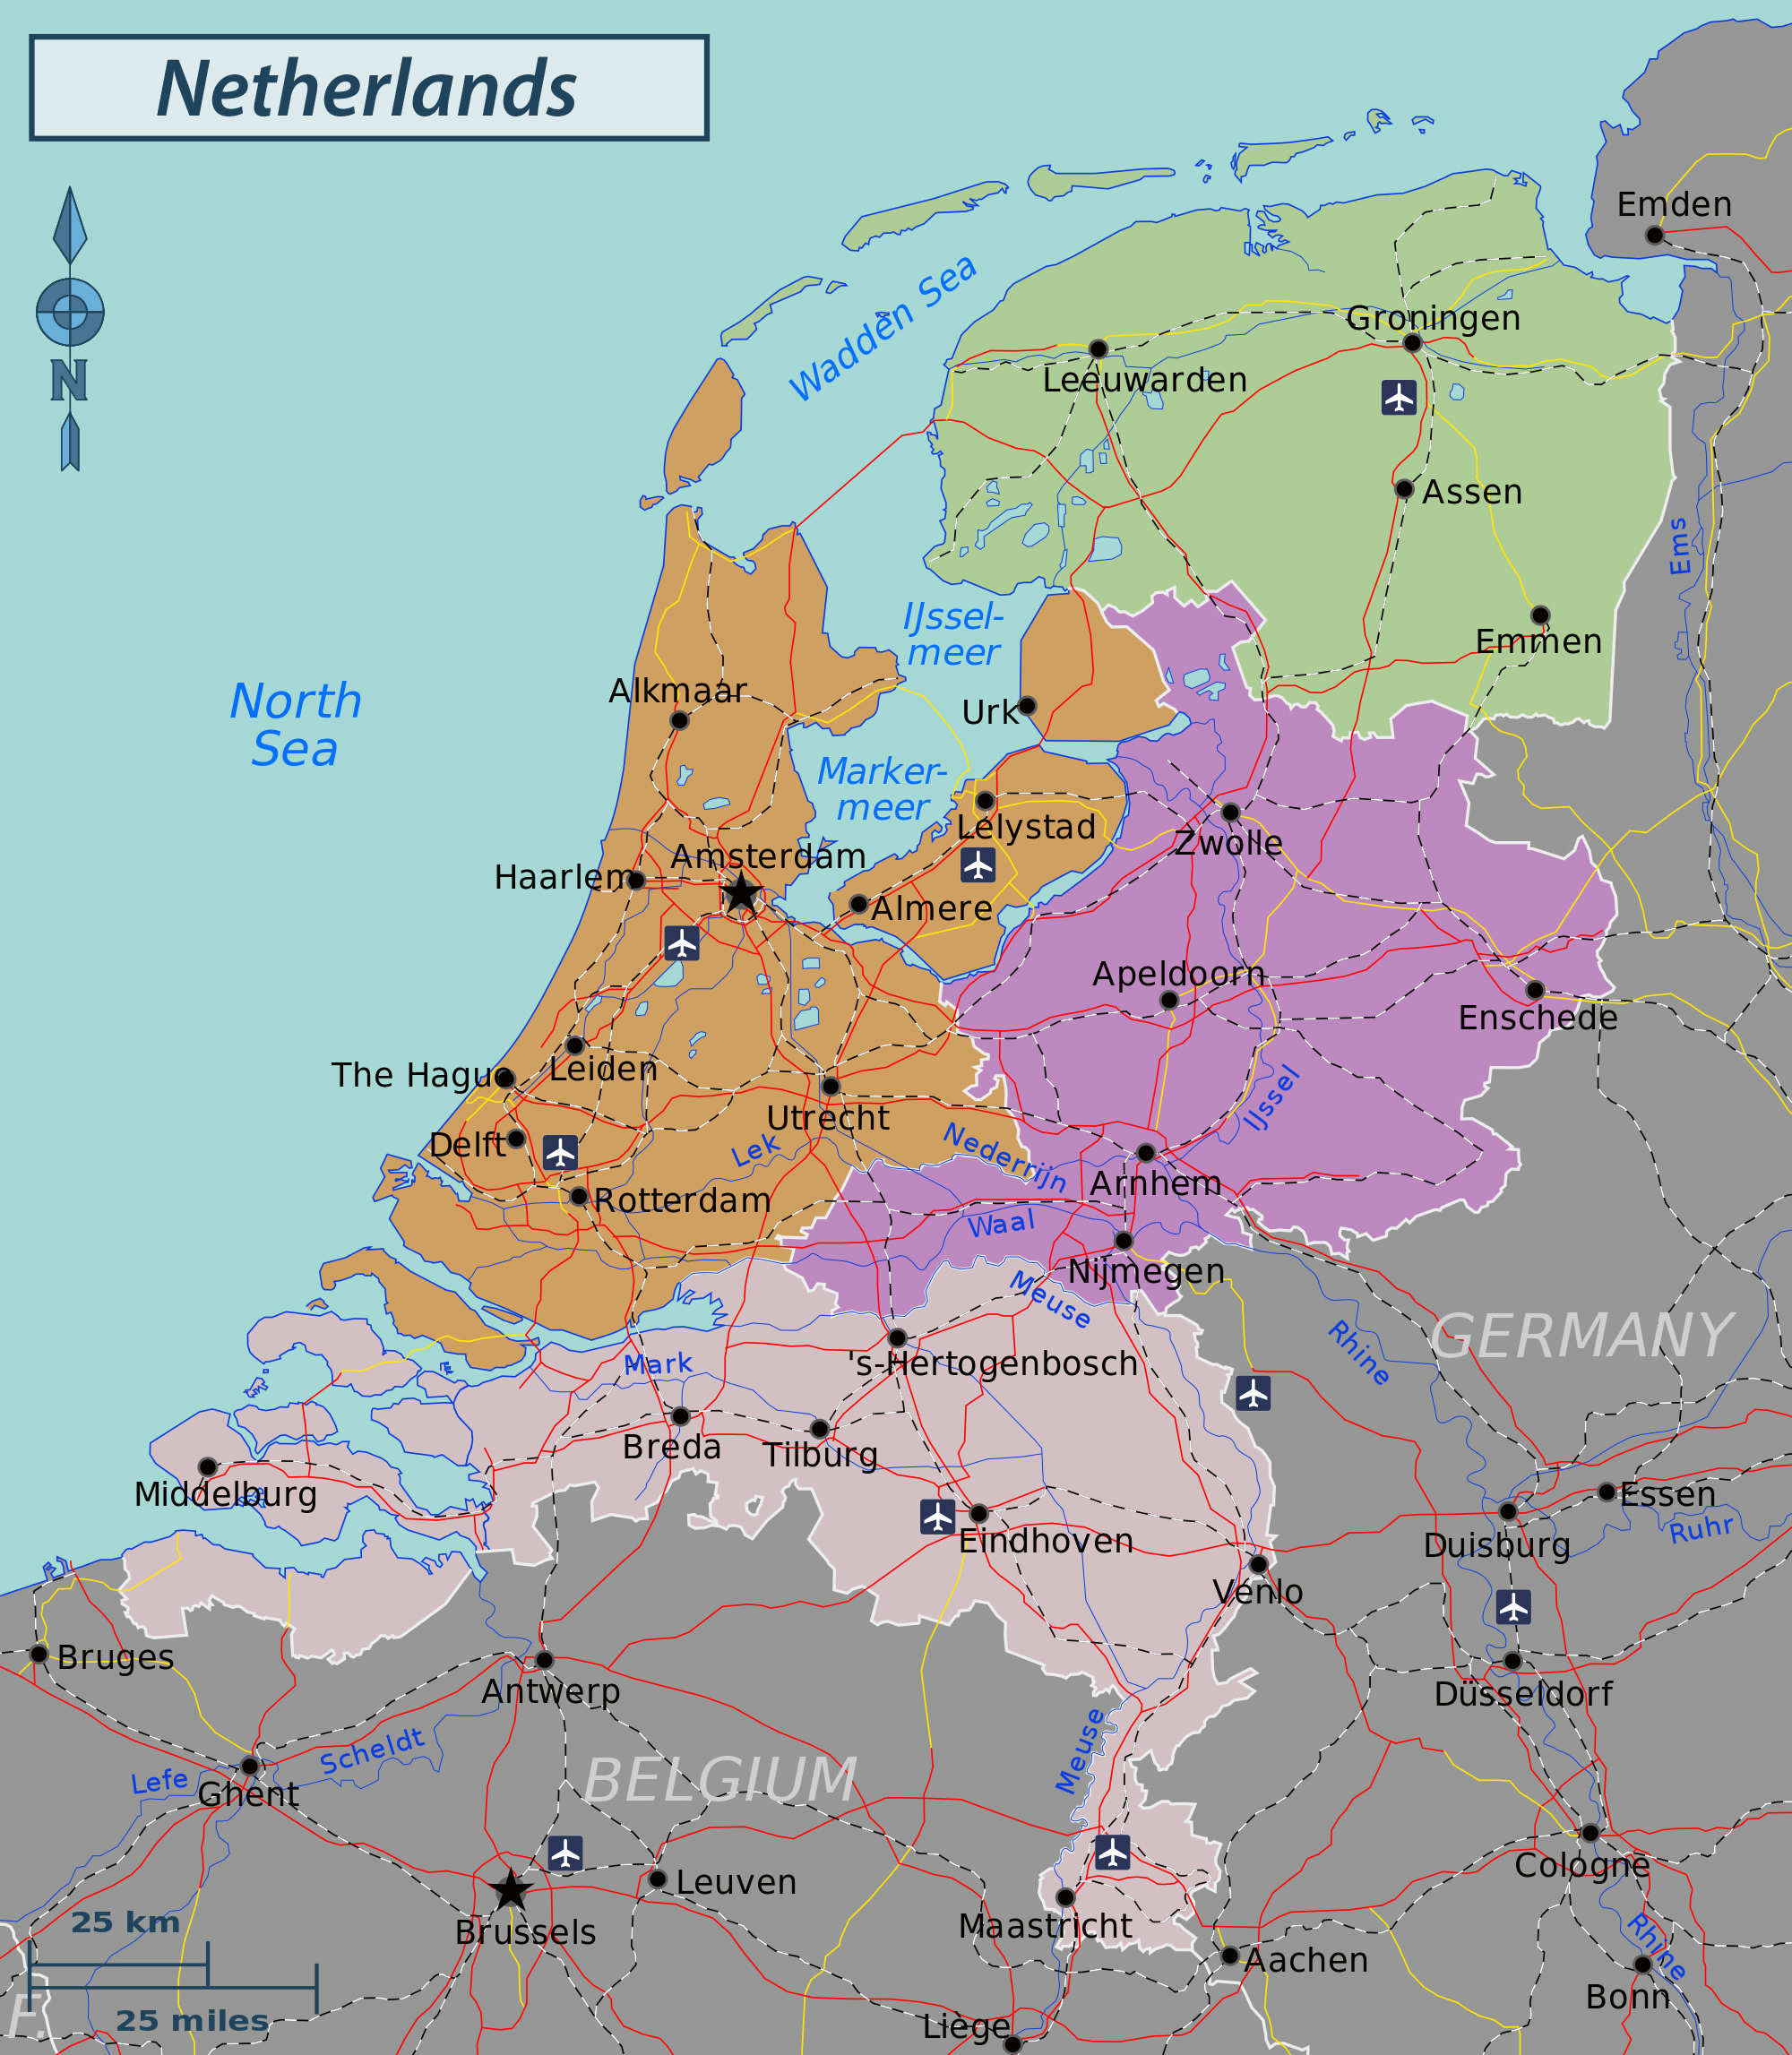 Large Regions Map Of Netherlands Netherlands Europe Mapsland Maps Of The World